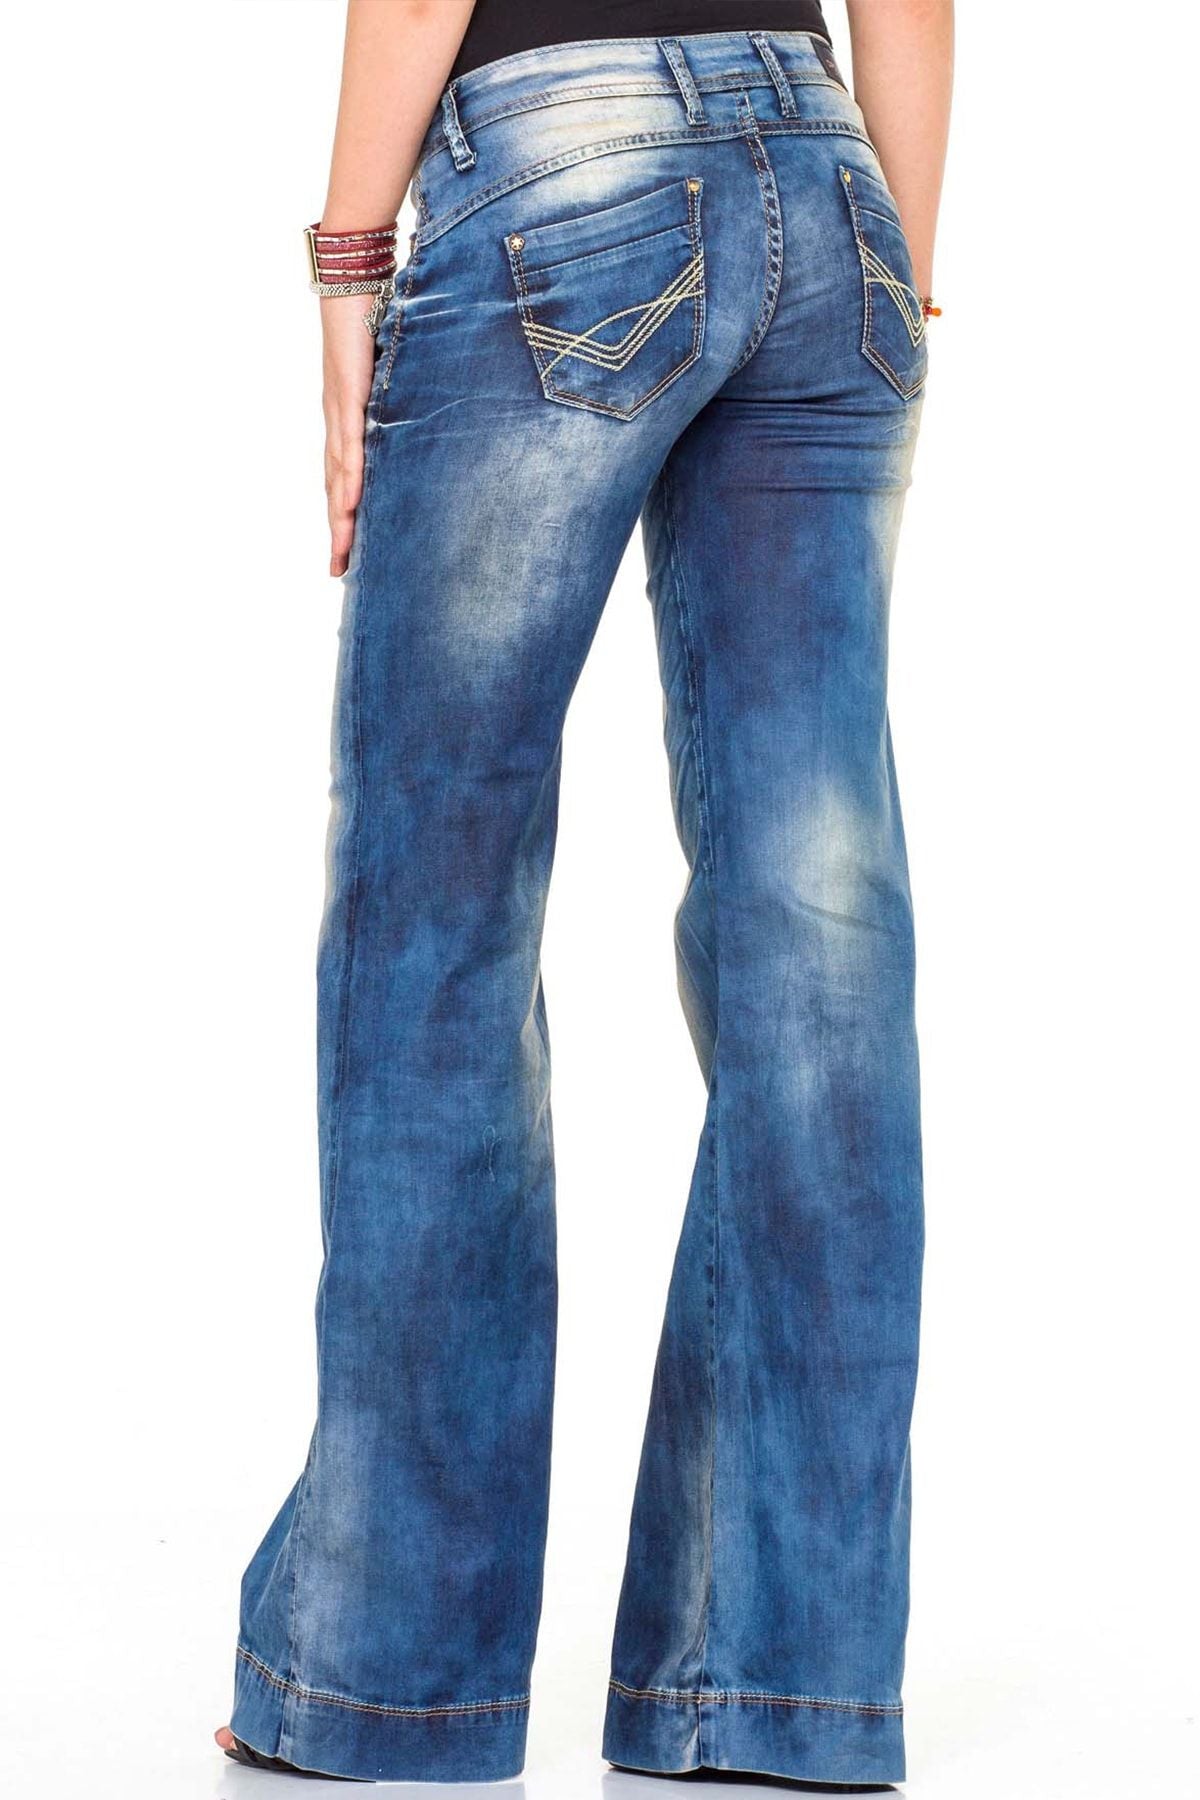 CBW-0424 Jeans Standard Donna